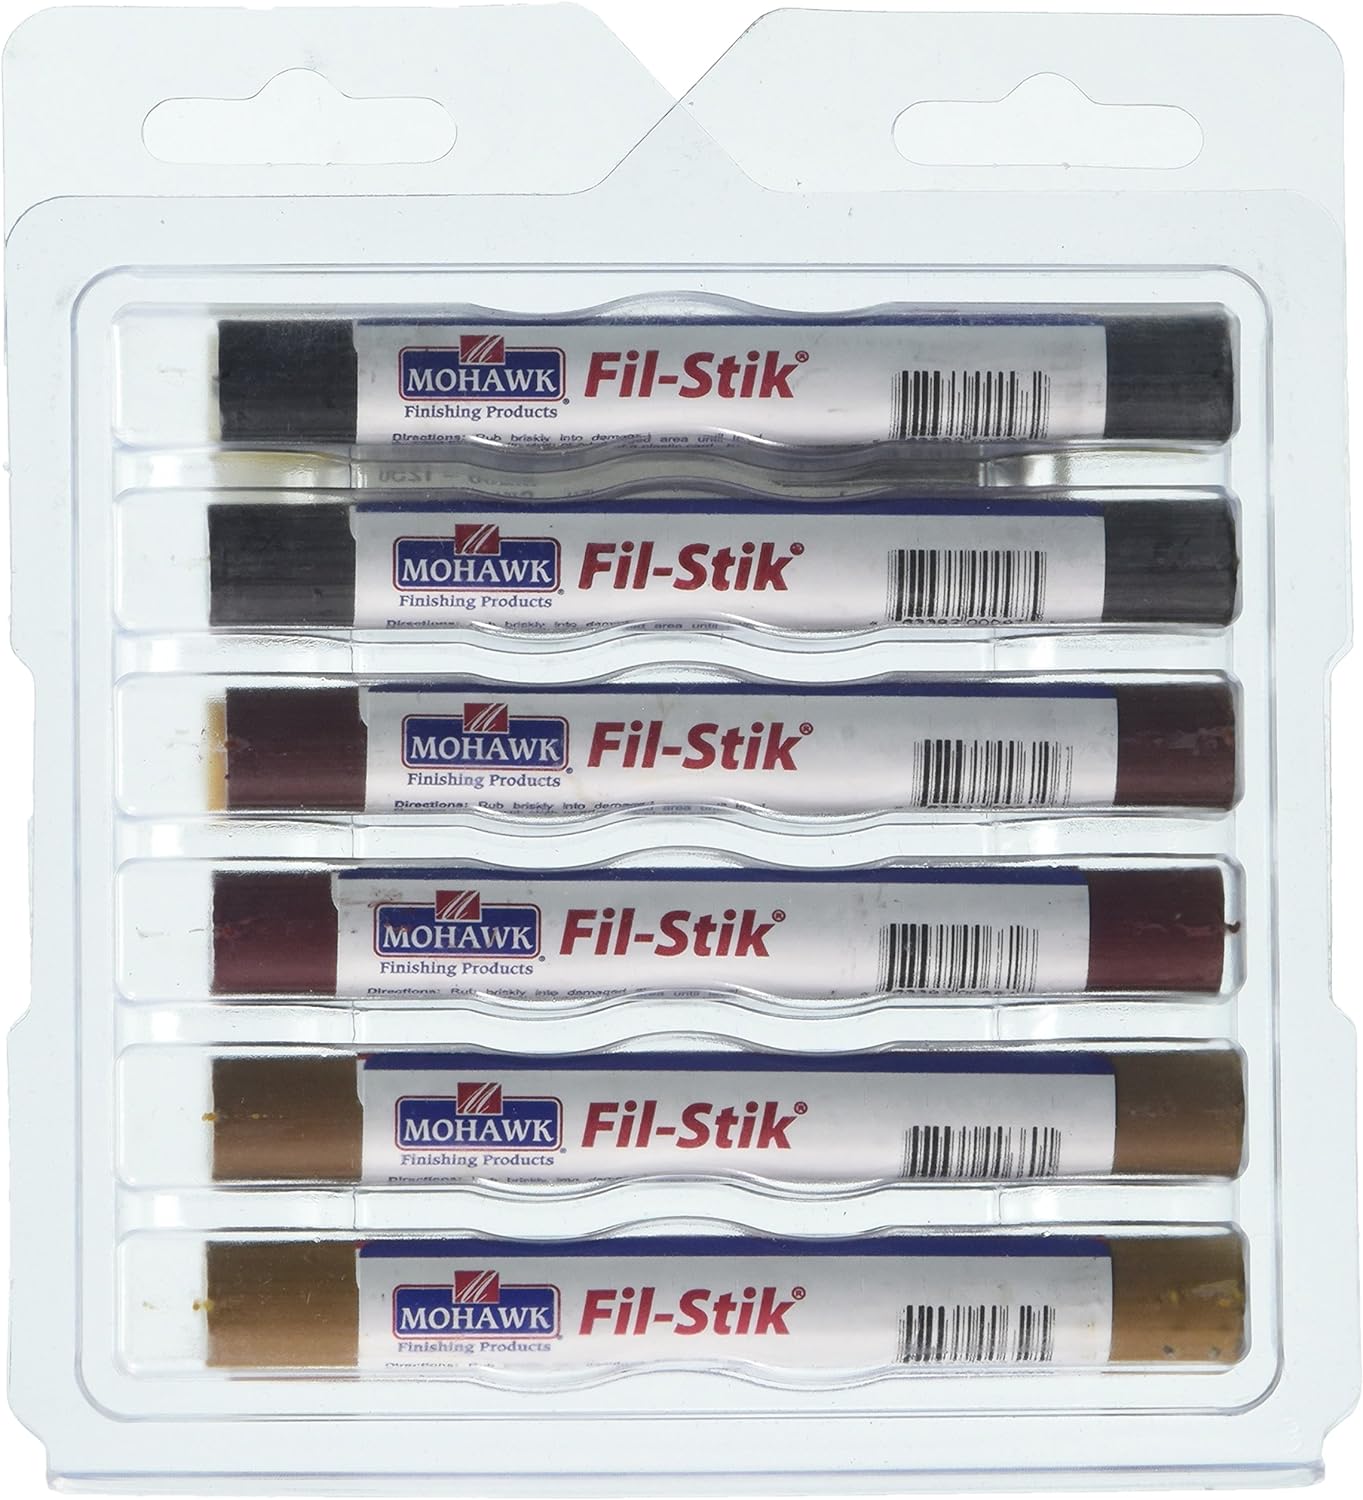 Mohawk Finishing Products M230-1250 Fil-Stik Repair Pencils (12 Pk), Multicolor